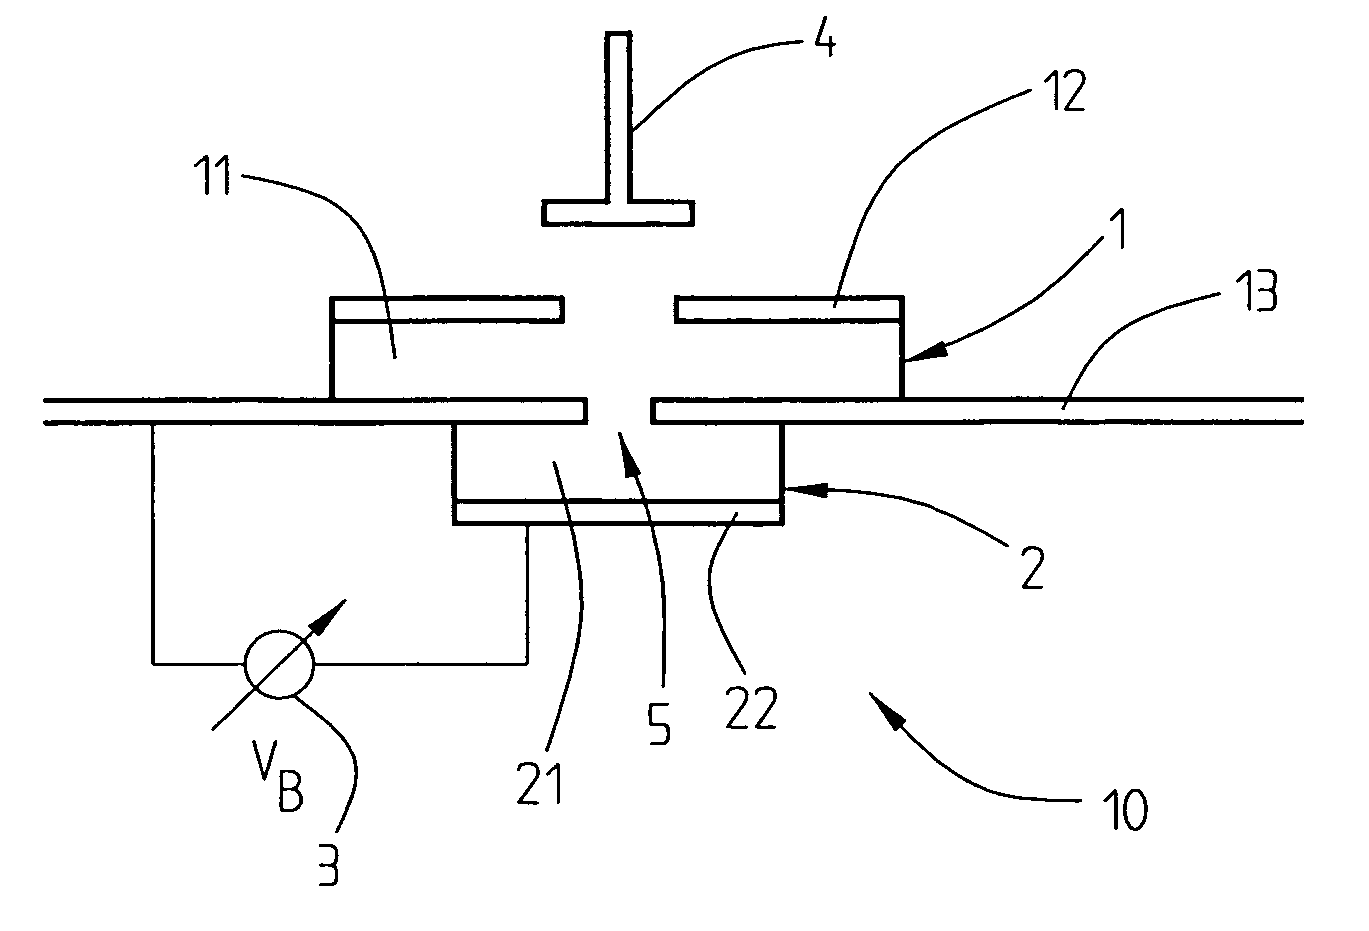 Tunable ferroelectric resonator arrangement